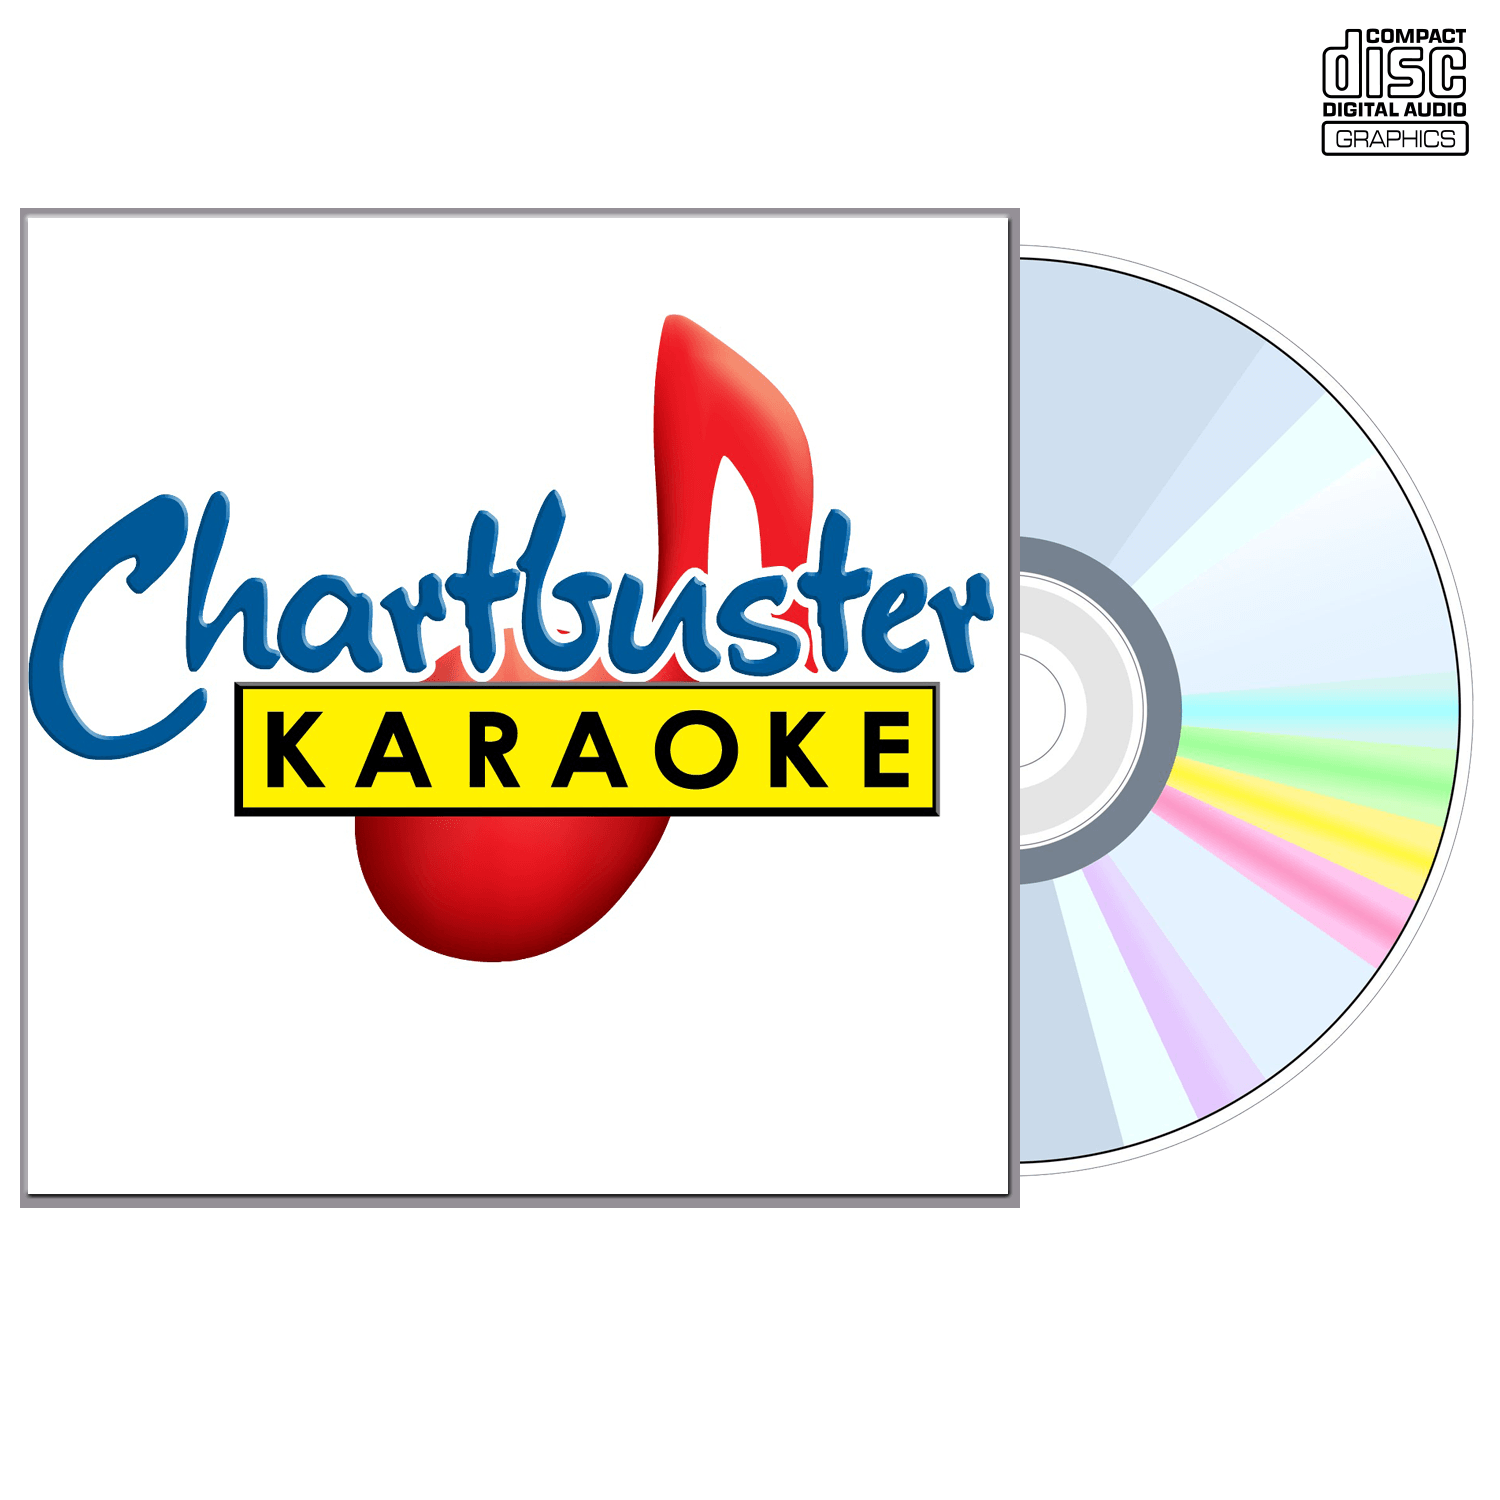 Cyndi Thomson - CD+G - Chartbuster Karaoke - Karaoke Home Entertainment